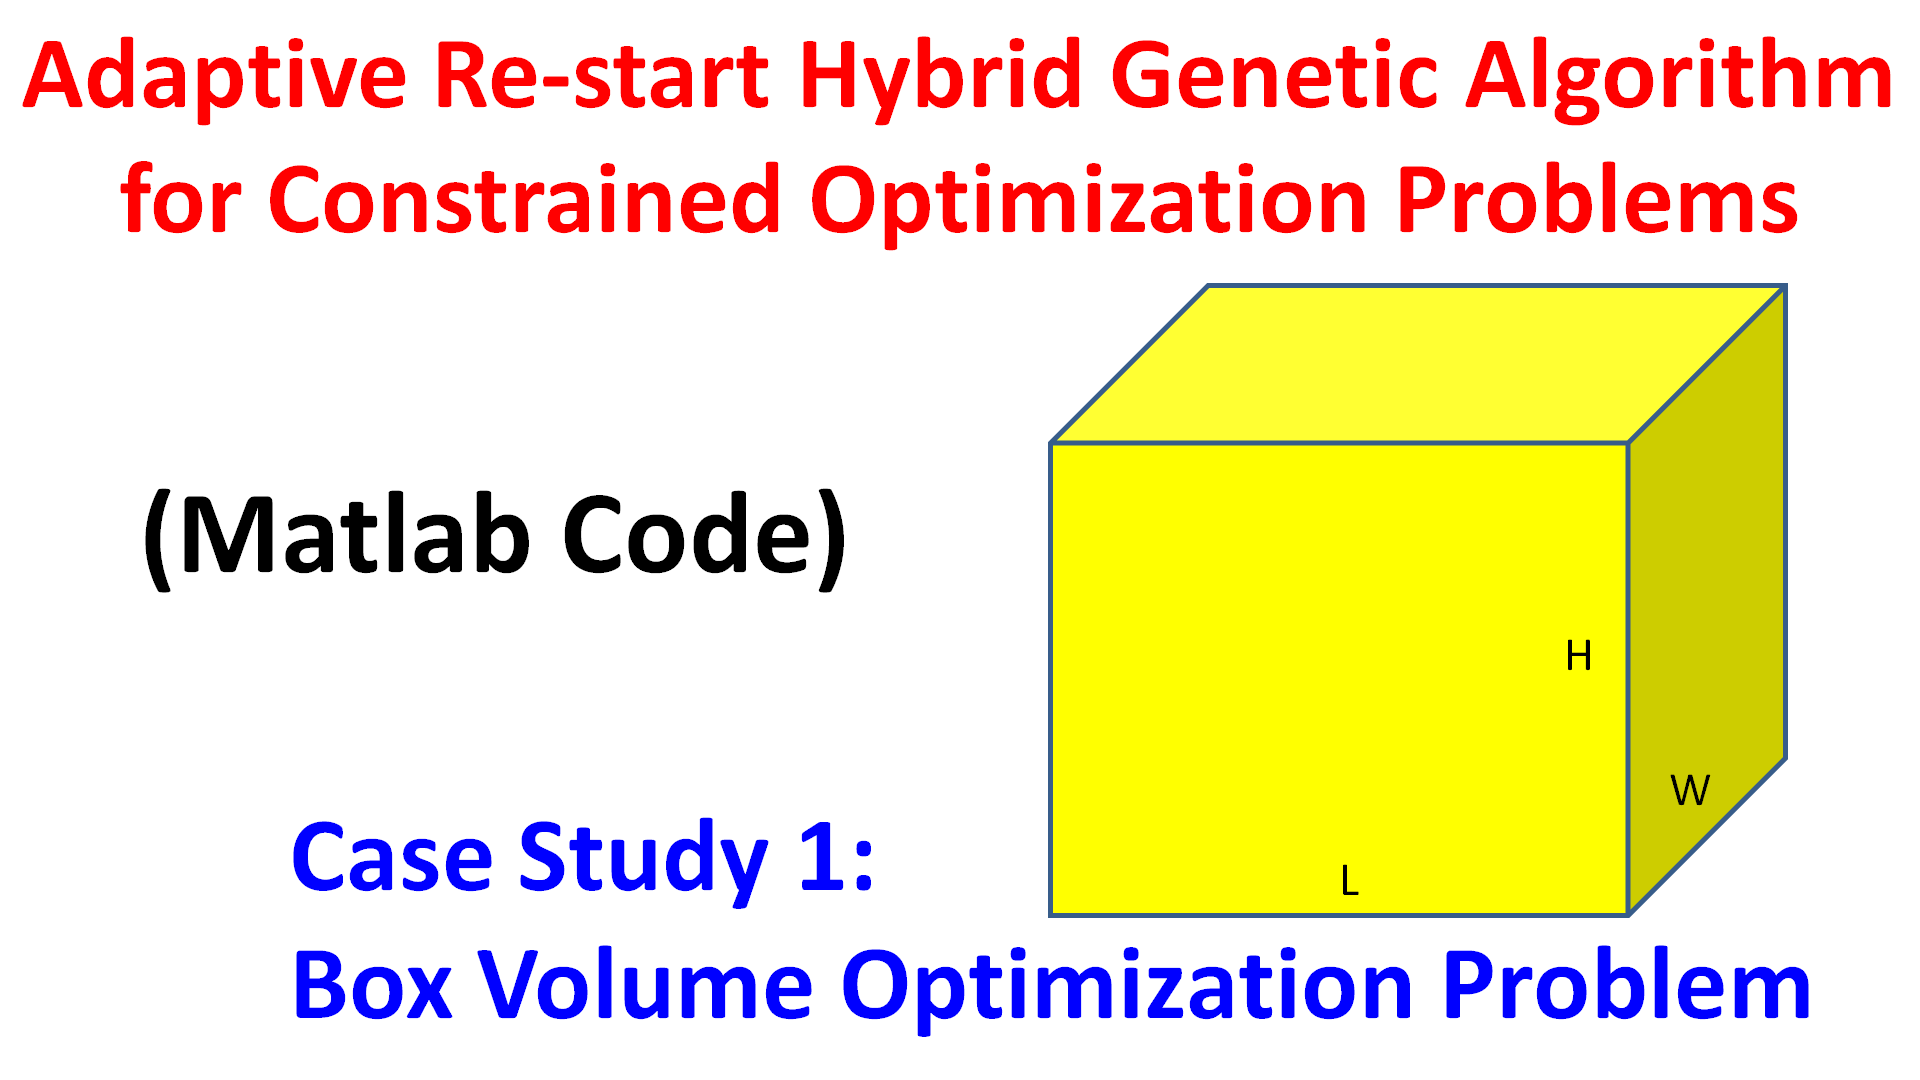 Adaptive Re-start Hybrid Genetic Algorithm for Constrained Optimization Problems (Case Study 1)